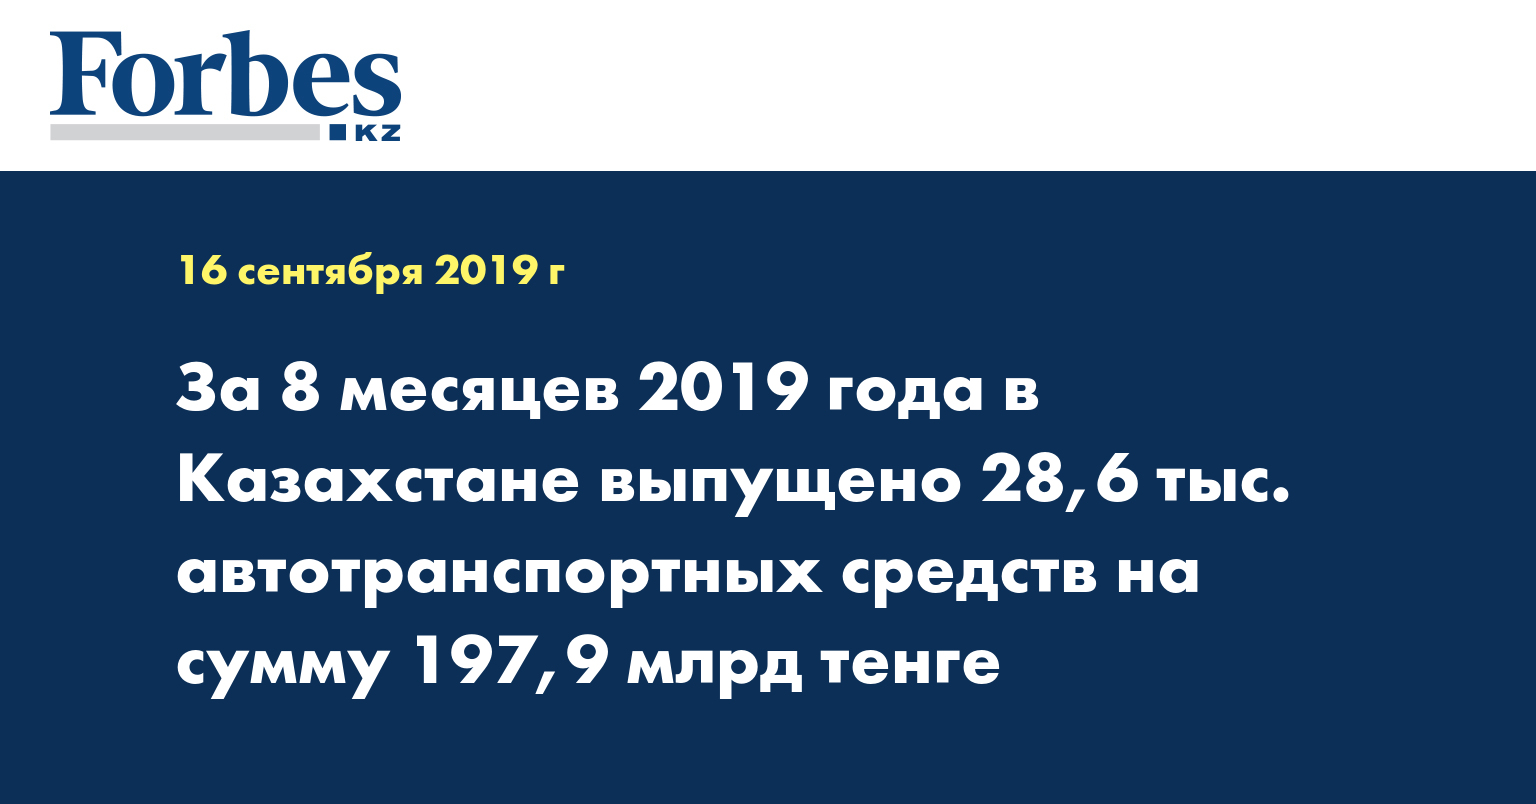 За 8 месяцев 2019 года в Казахстане выпущено 28,6 тыс. автотранспортных средств на сумму 197,9 млрд тенге